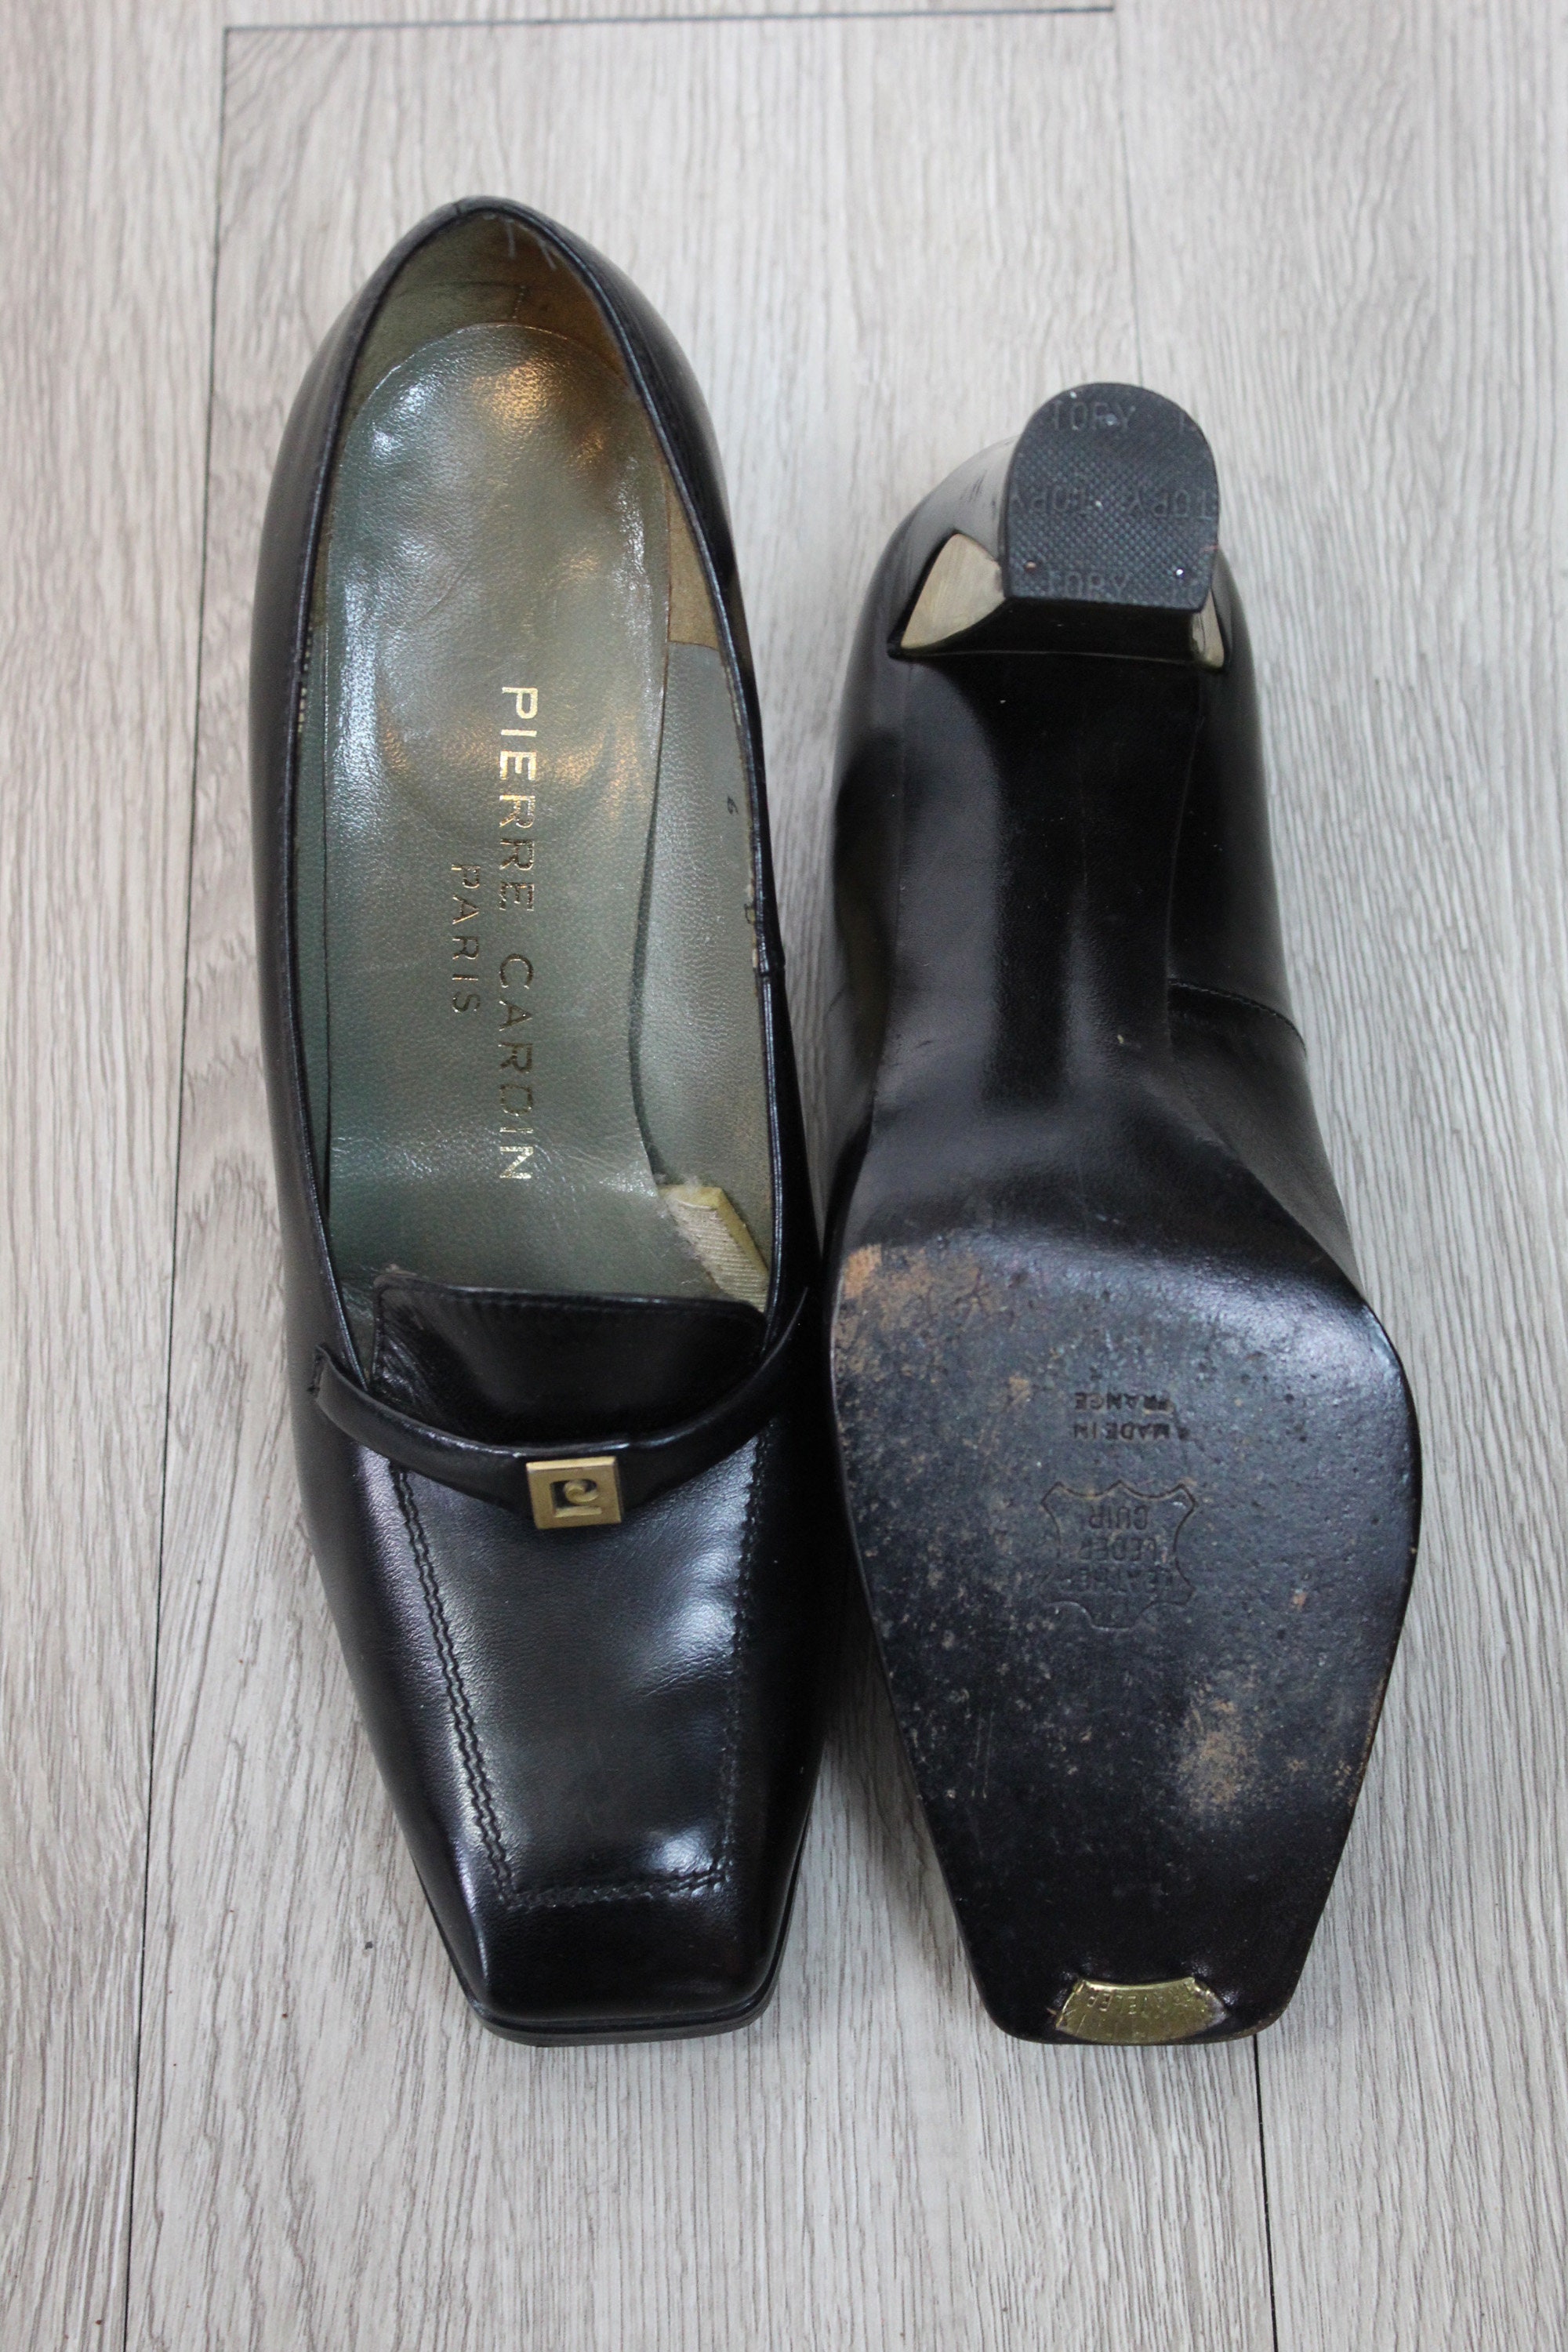 1970 PIERRE CARDIN scarpe mocassini taglia 6 us nuova primavera Scarpe Calzature donna Scarpe senza lacci Pantofole 